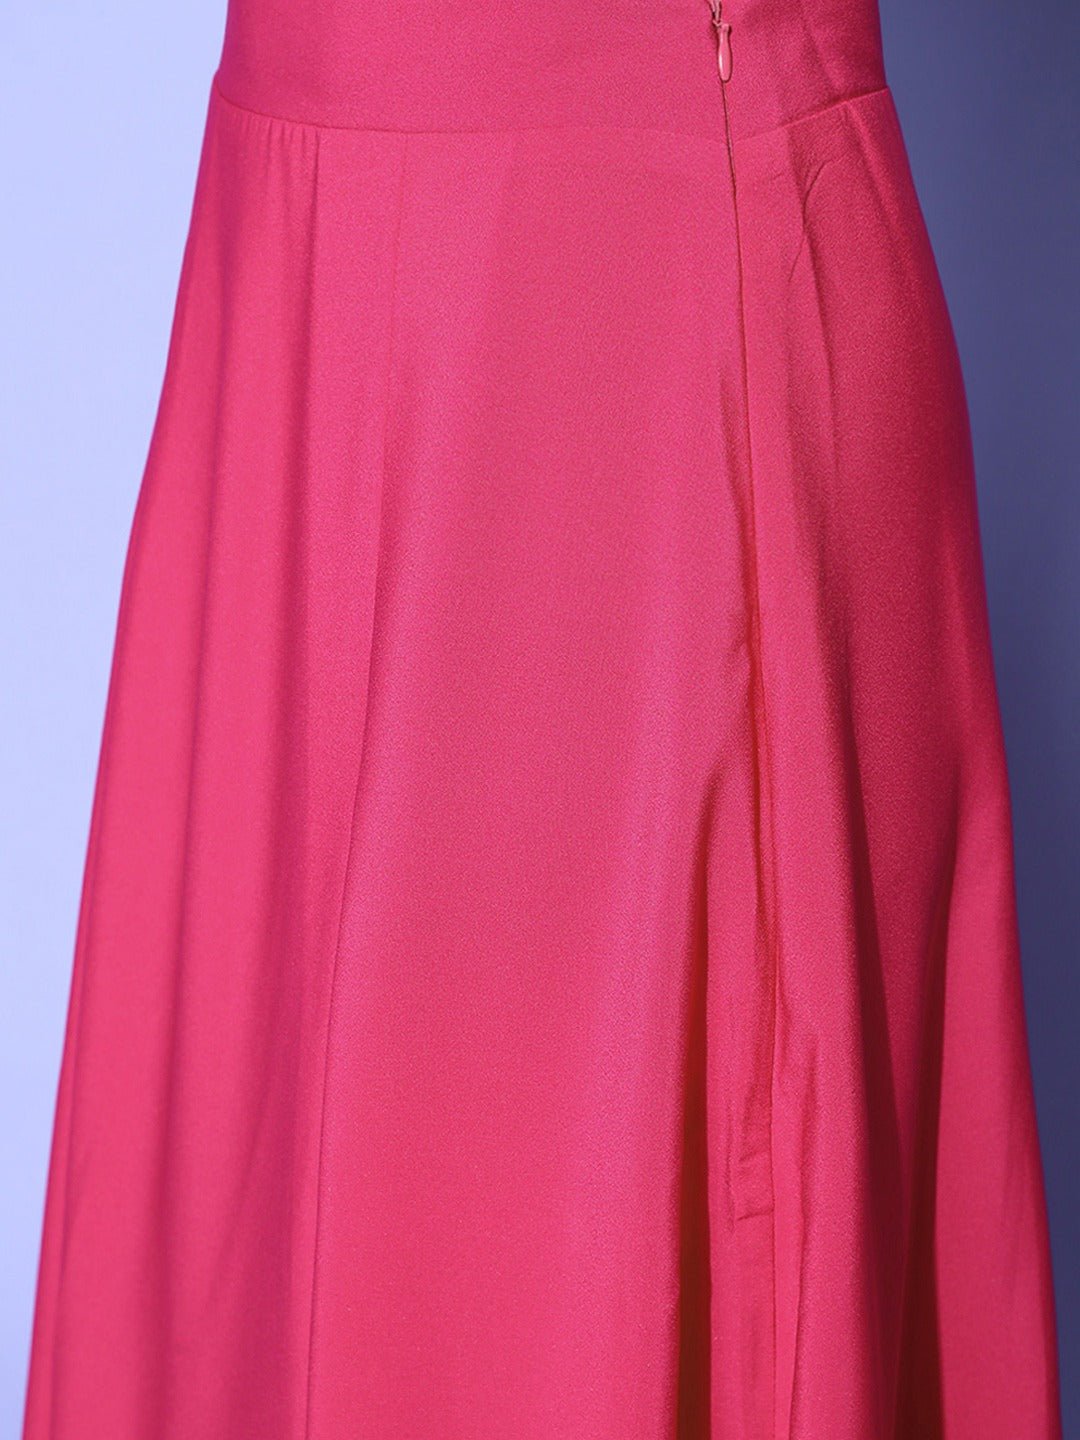 Folk Republic Women Solid Pink Square Neck Side-Slit Smocked Crop Top & Maxi Skirt Co-Ord Set - #folk republic#